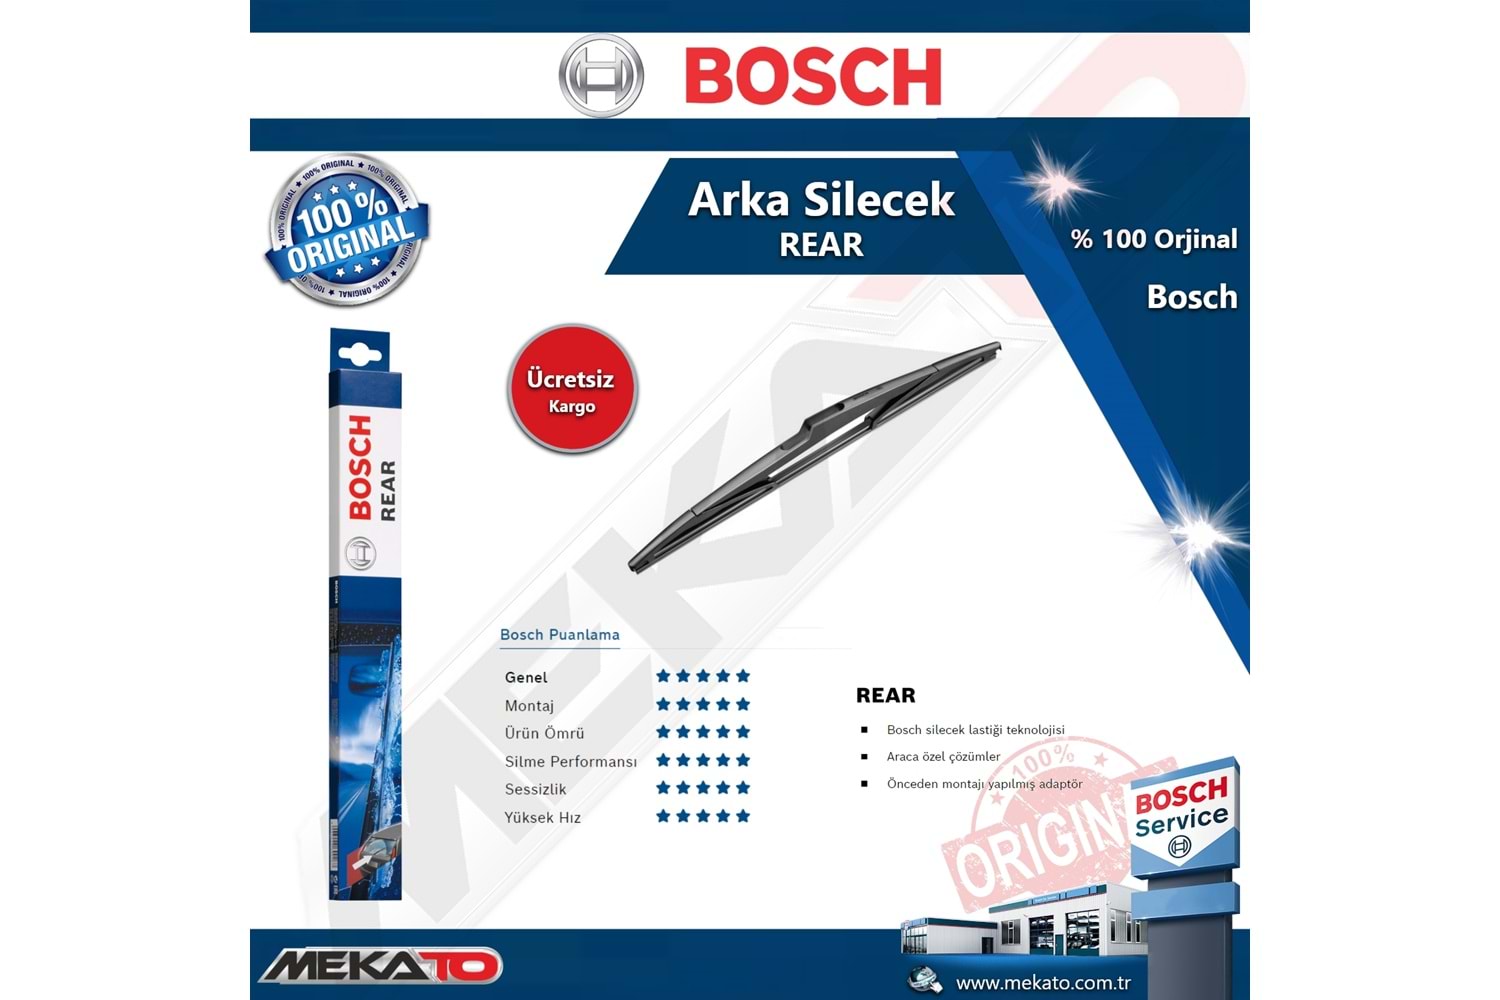 Ford Focus 3 Hb Arka Silecek Bosch Rear 2011-2018